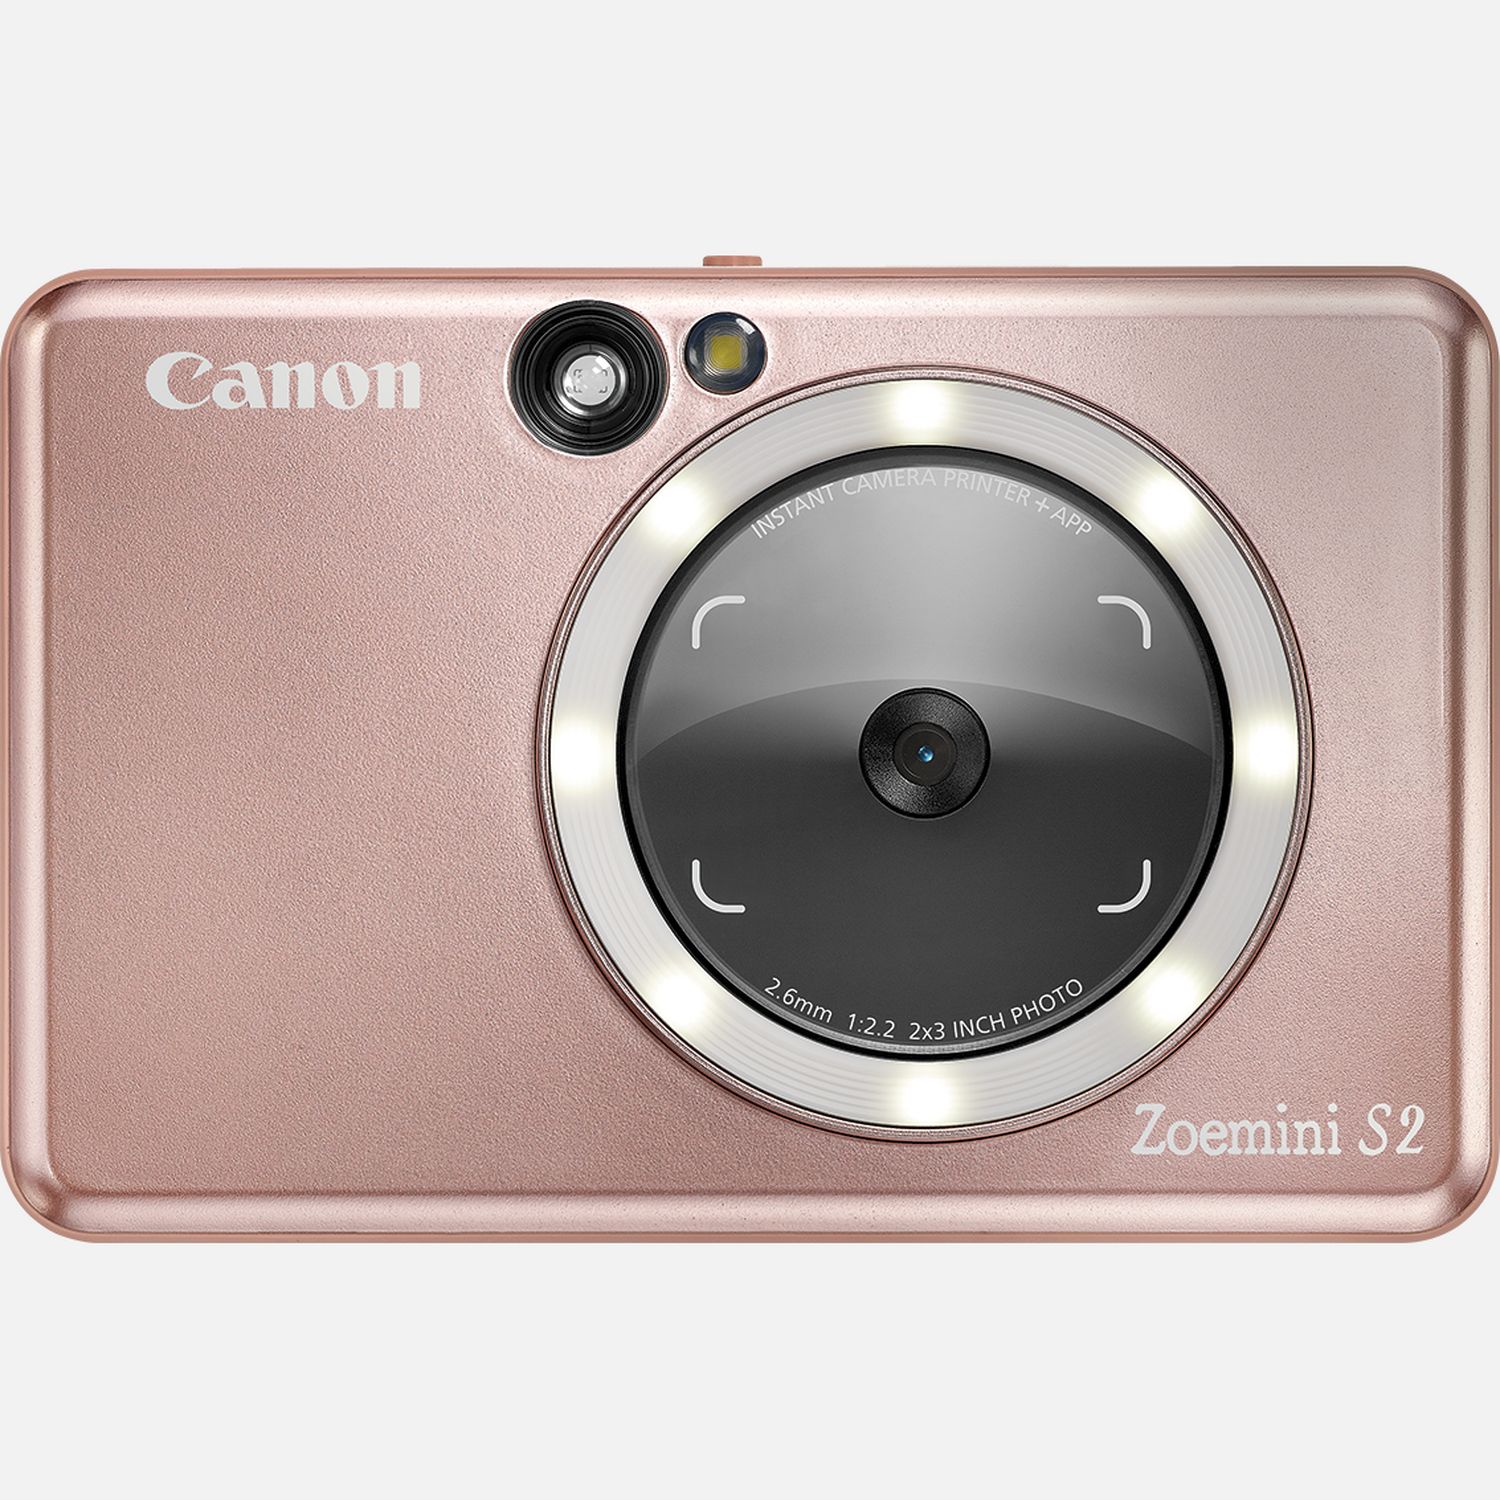 Canon Zoemini Photo Printer (white) - 3204C006 